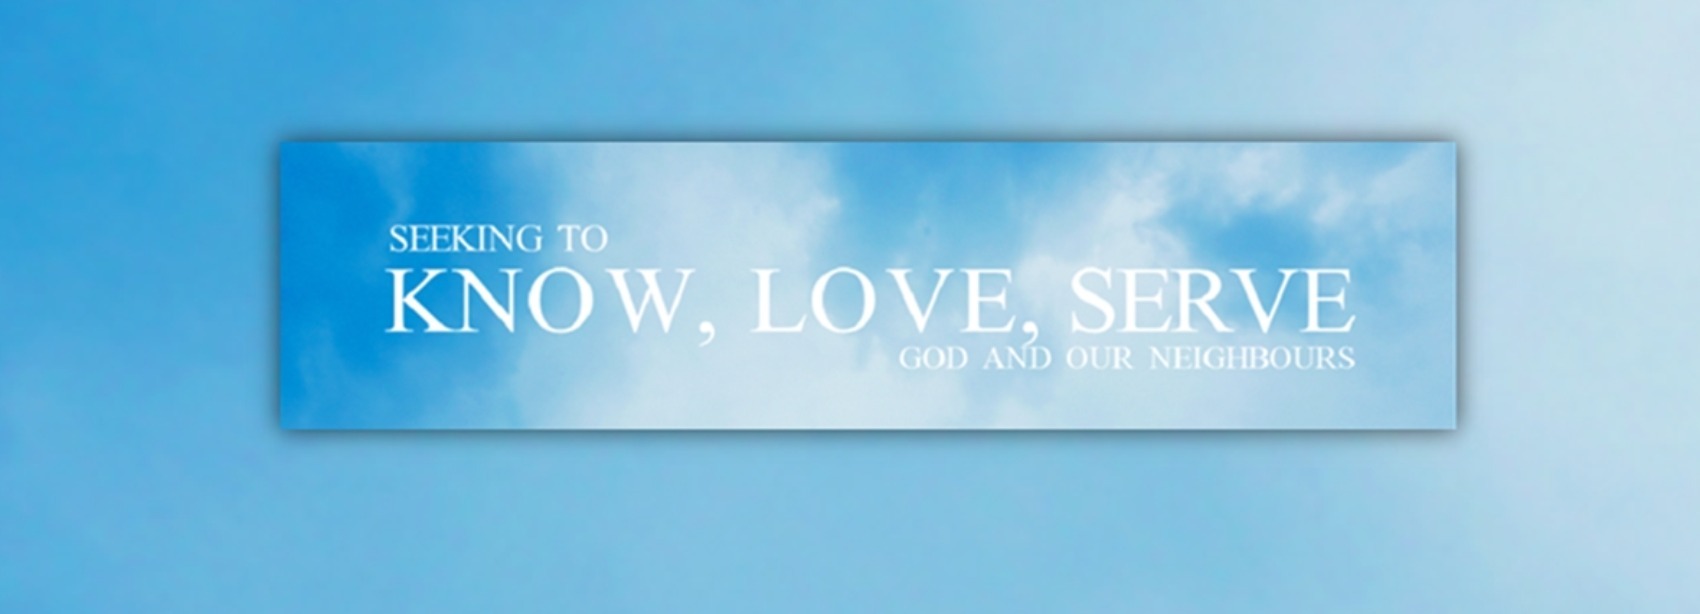 Seeking*to know love serve*God